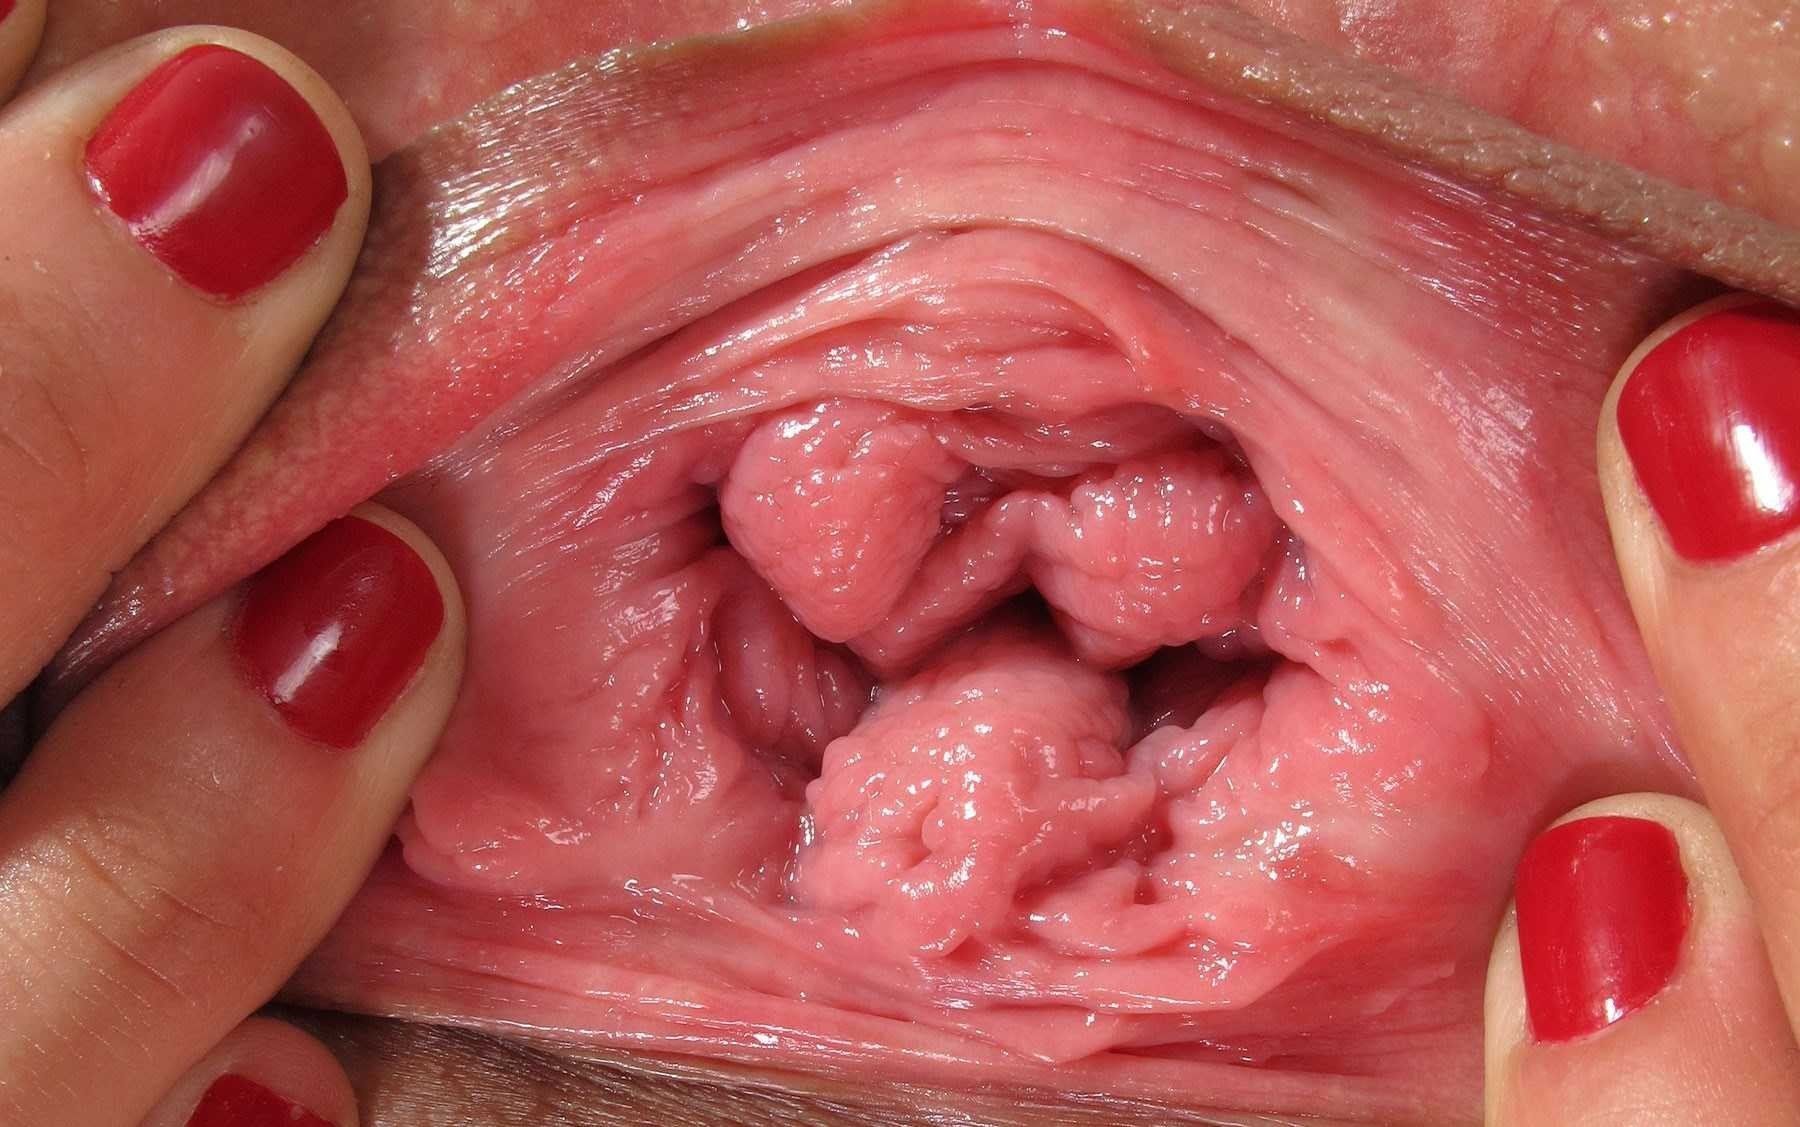 Fits whole head inside vagina